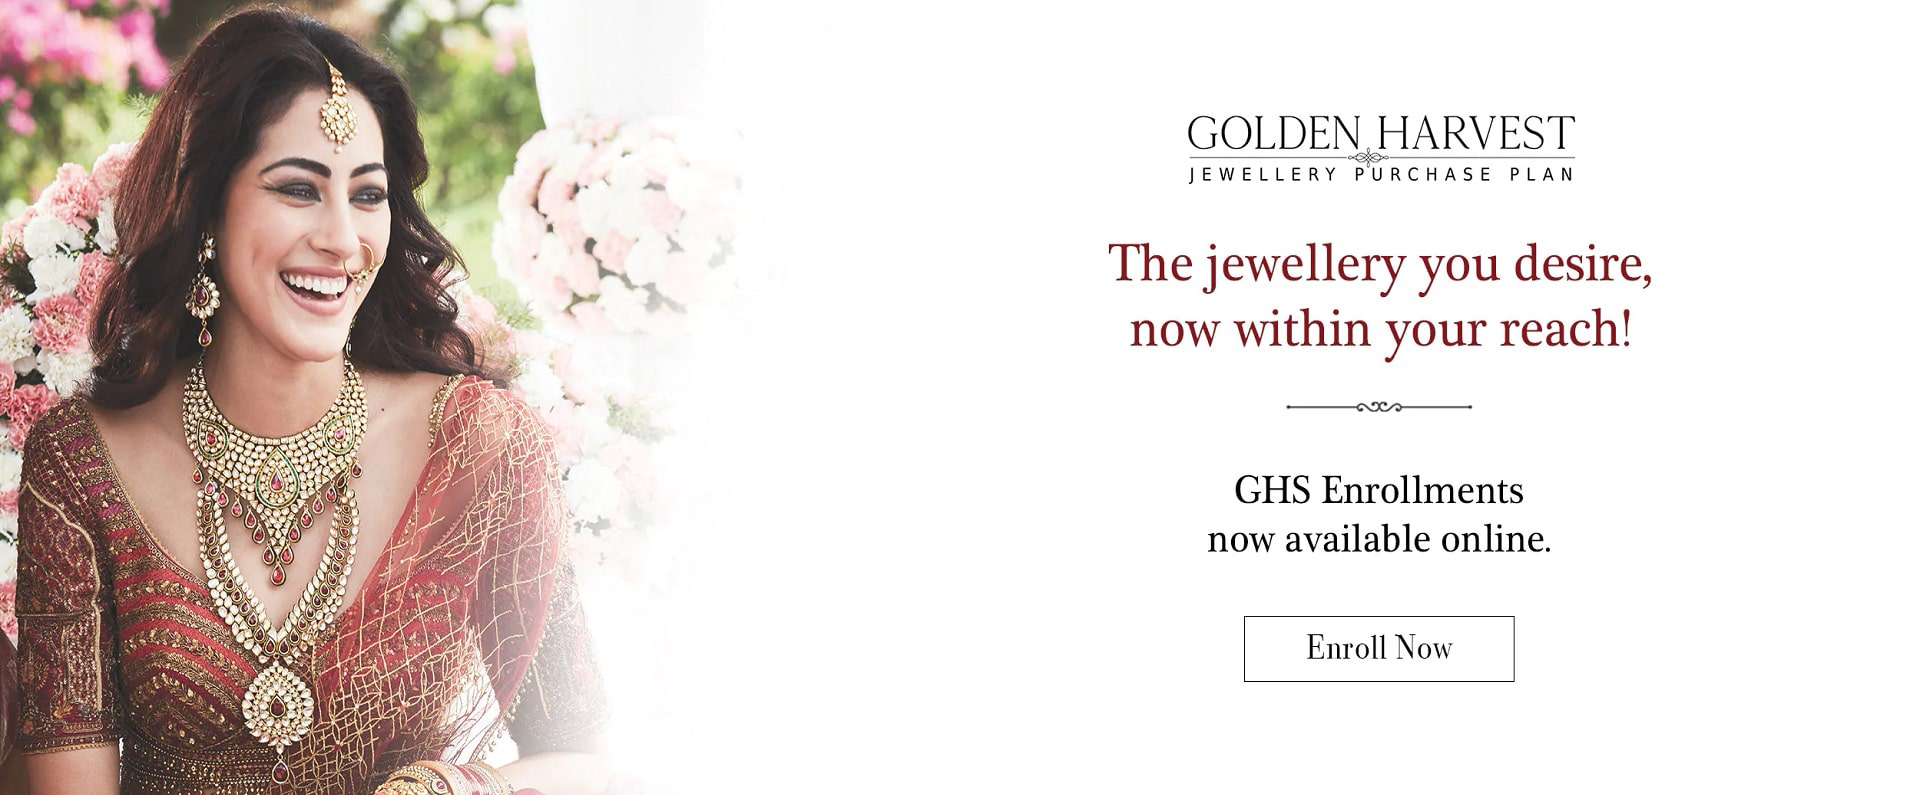 Golden harvest jewellery purchase plan